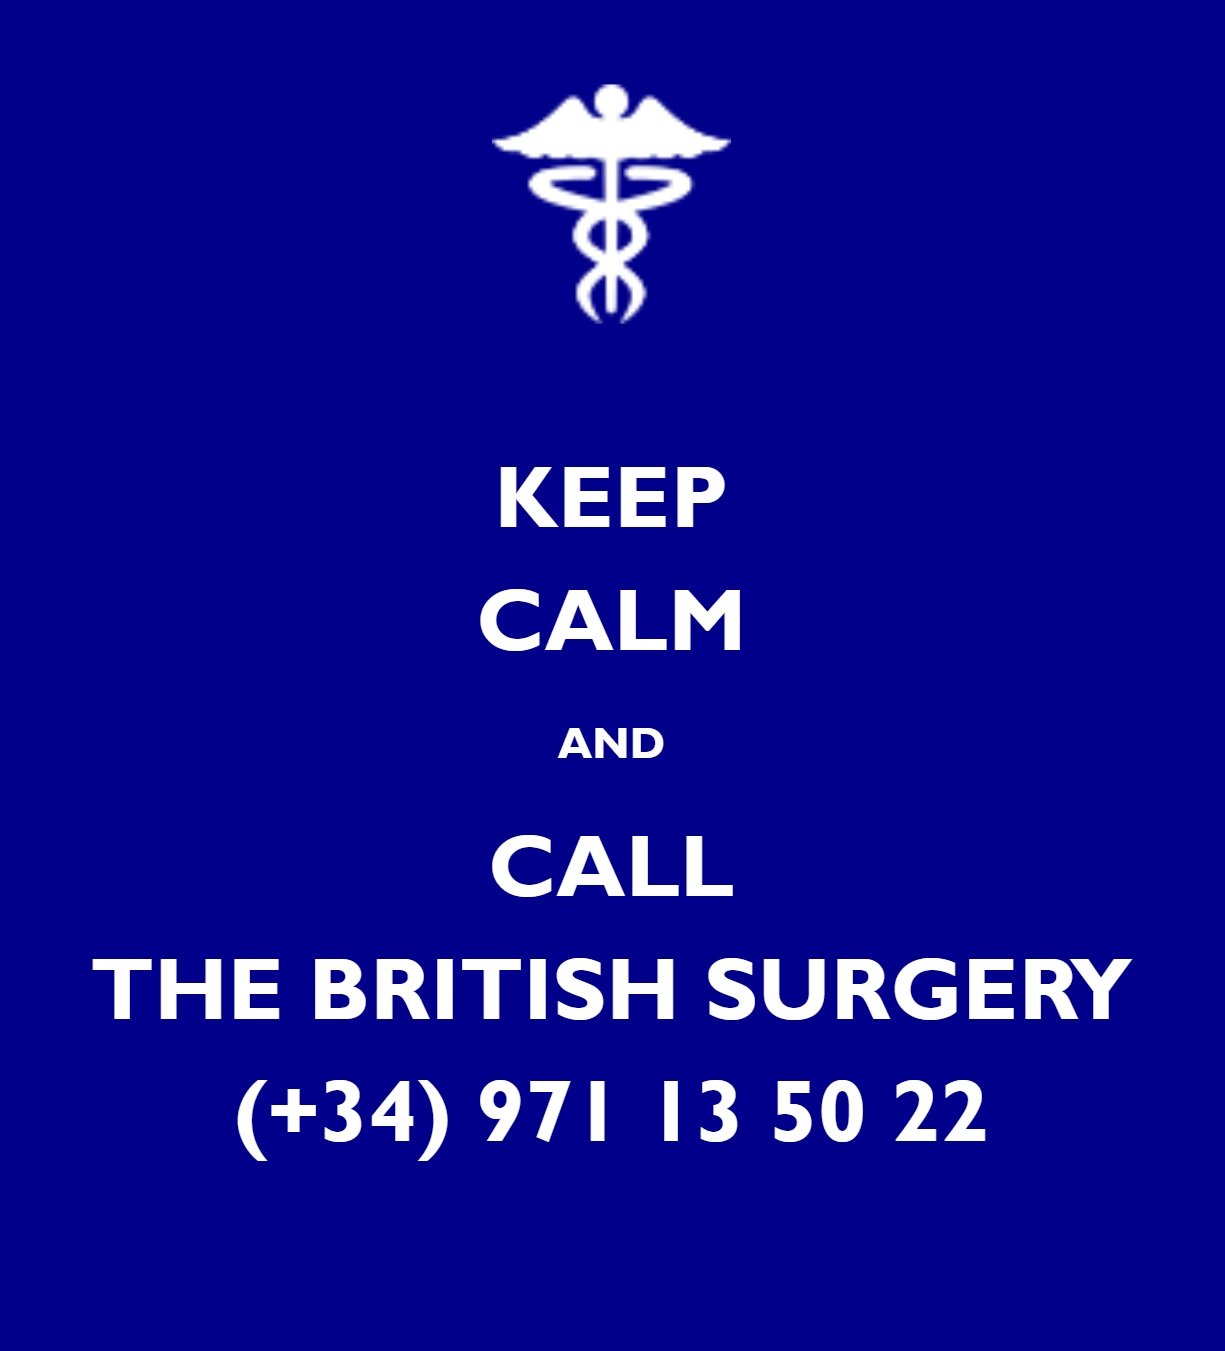 The British Surgery